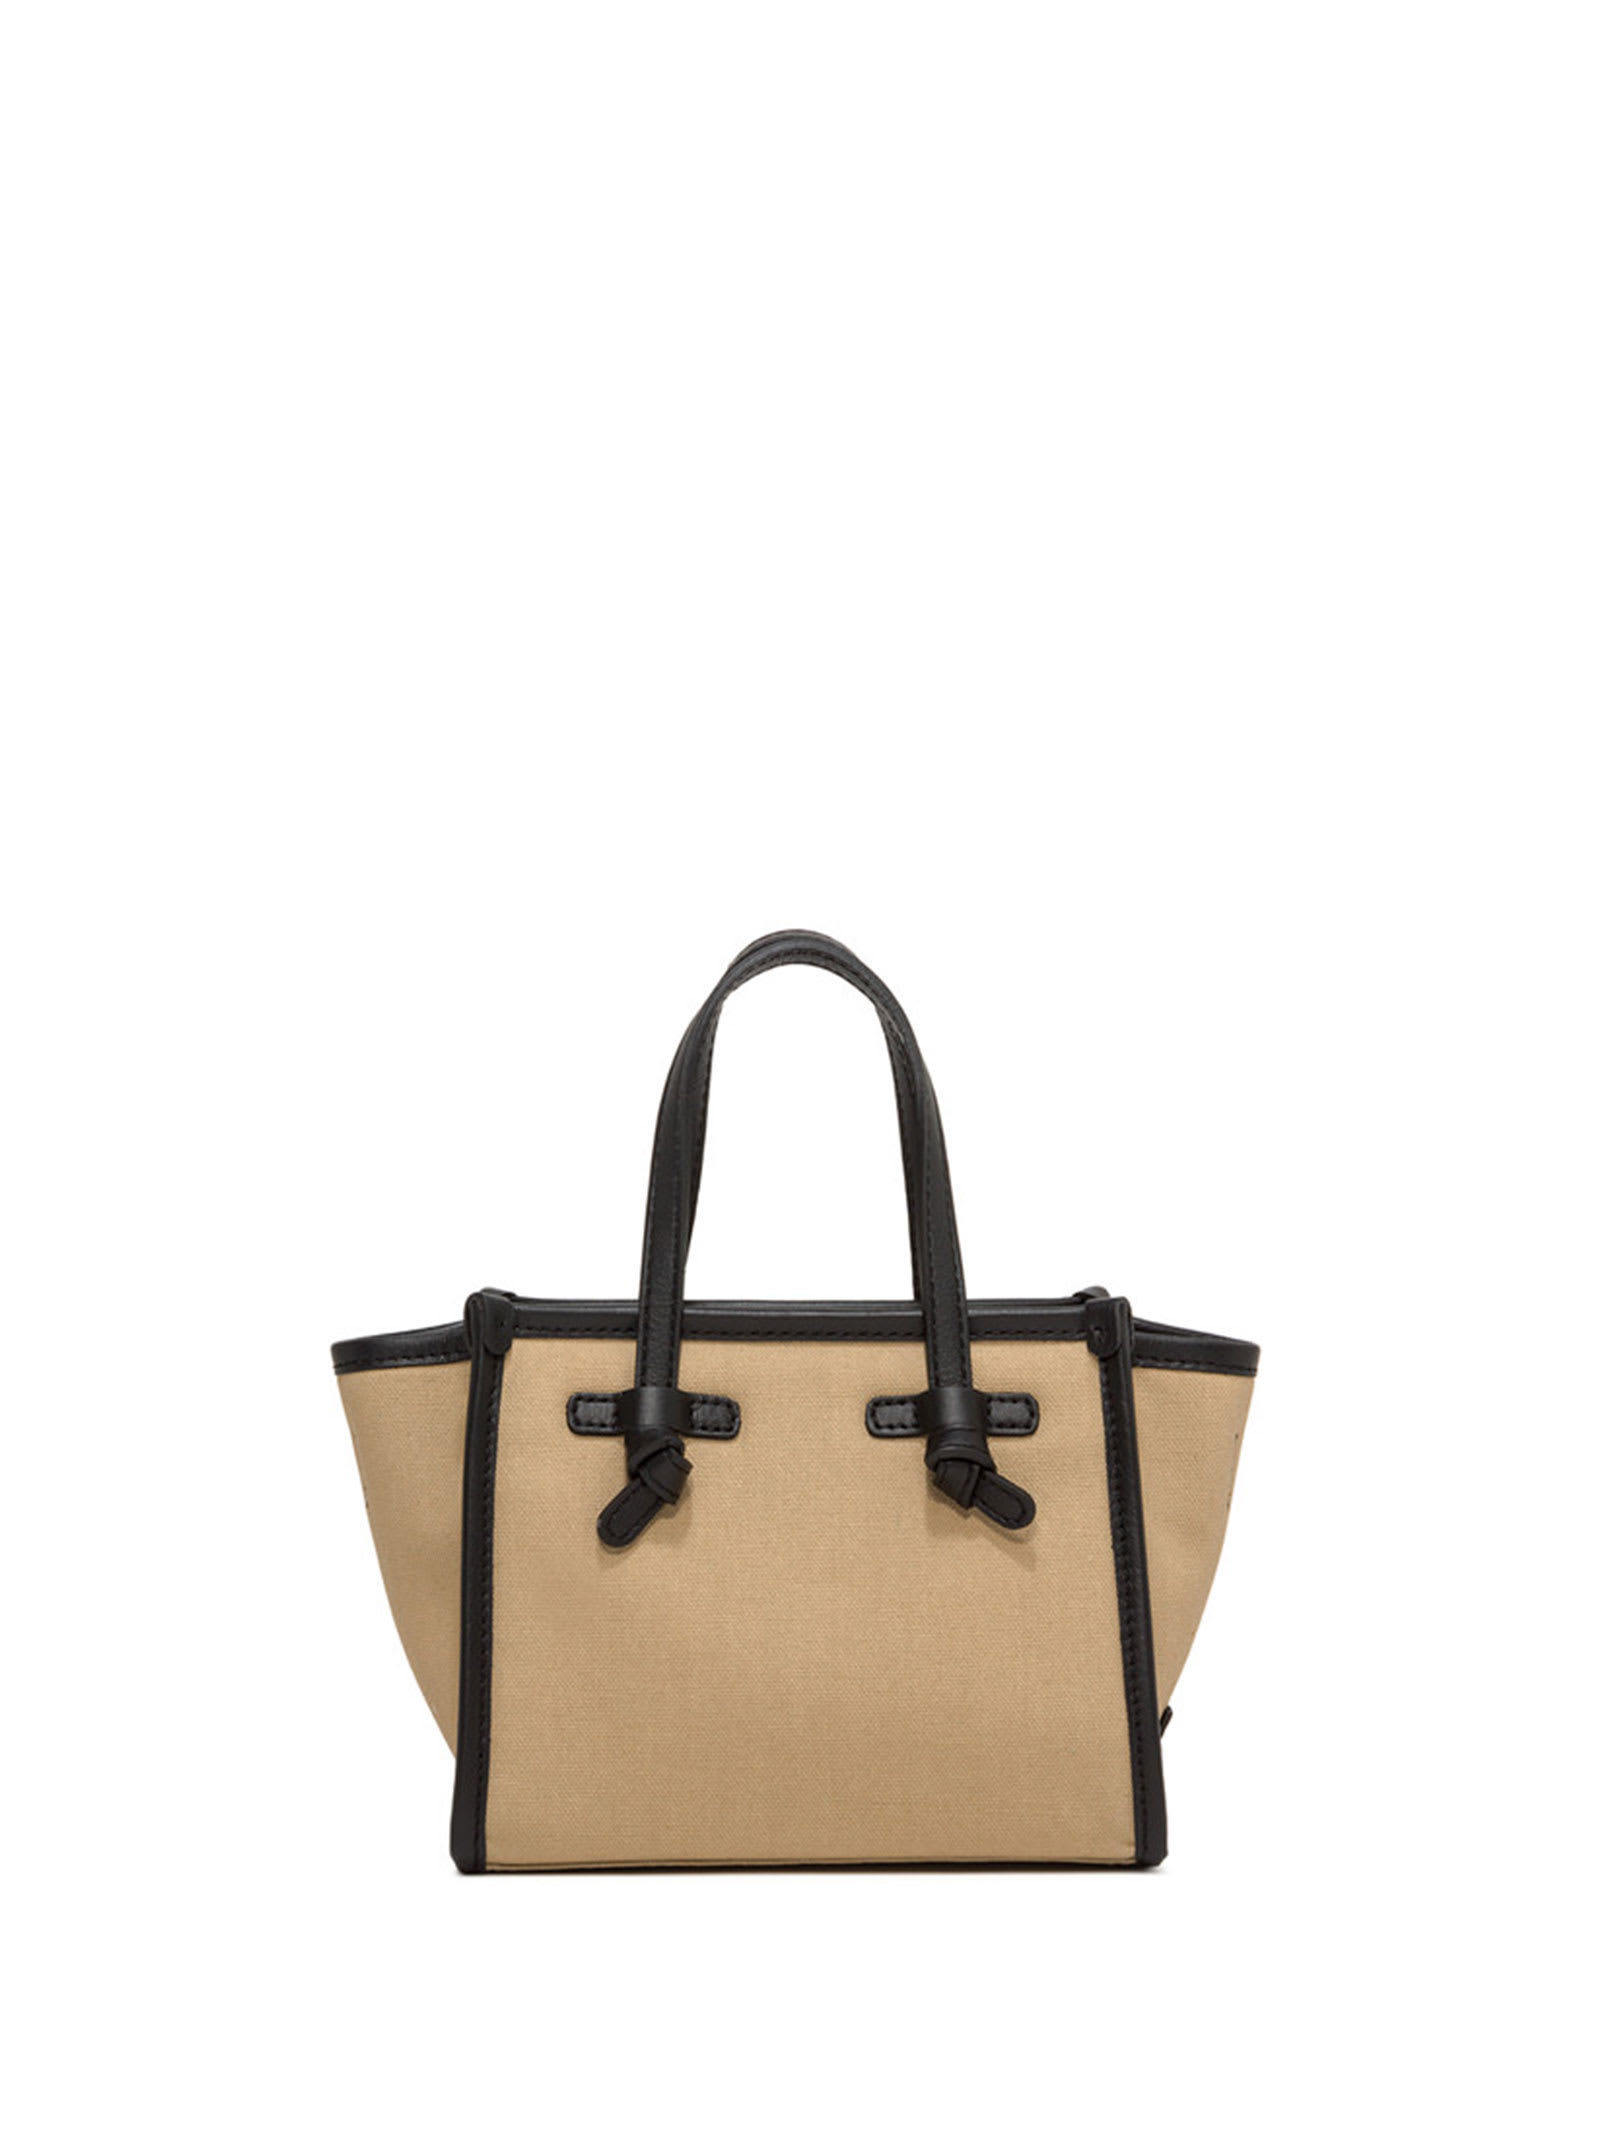 Gianni Chiarini Handbag With Contrasting Details